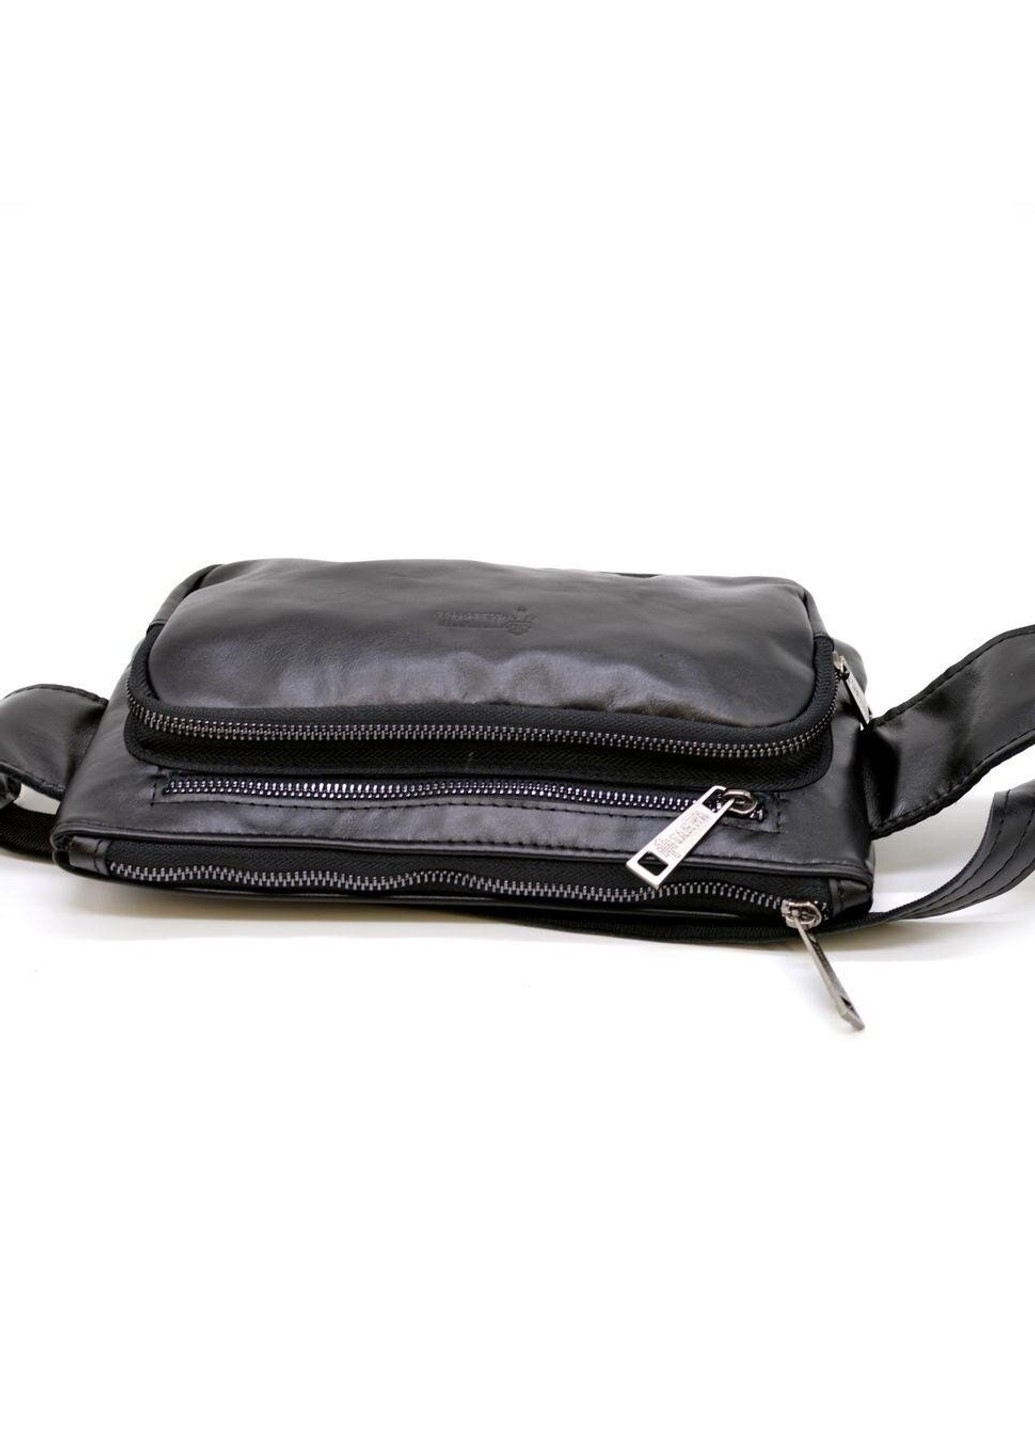 Кожаная черная сумка на пояс унисекс ga-8137-3md TARWA (263776536)